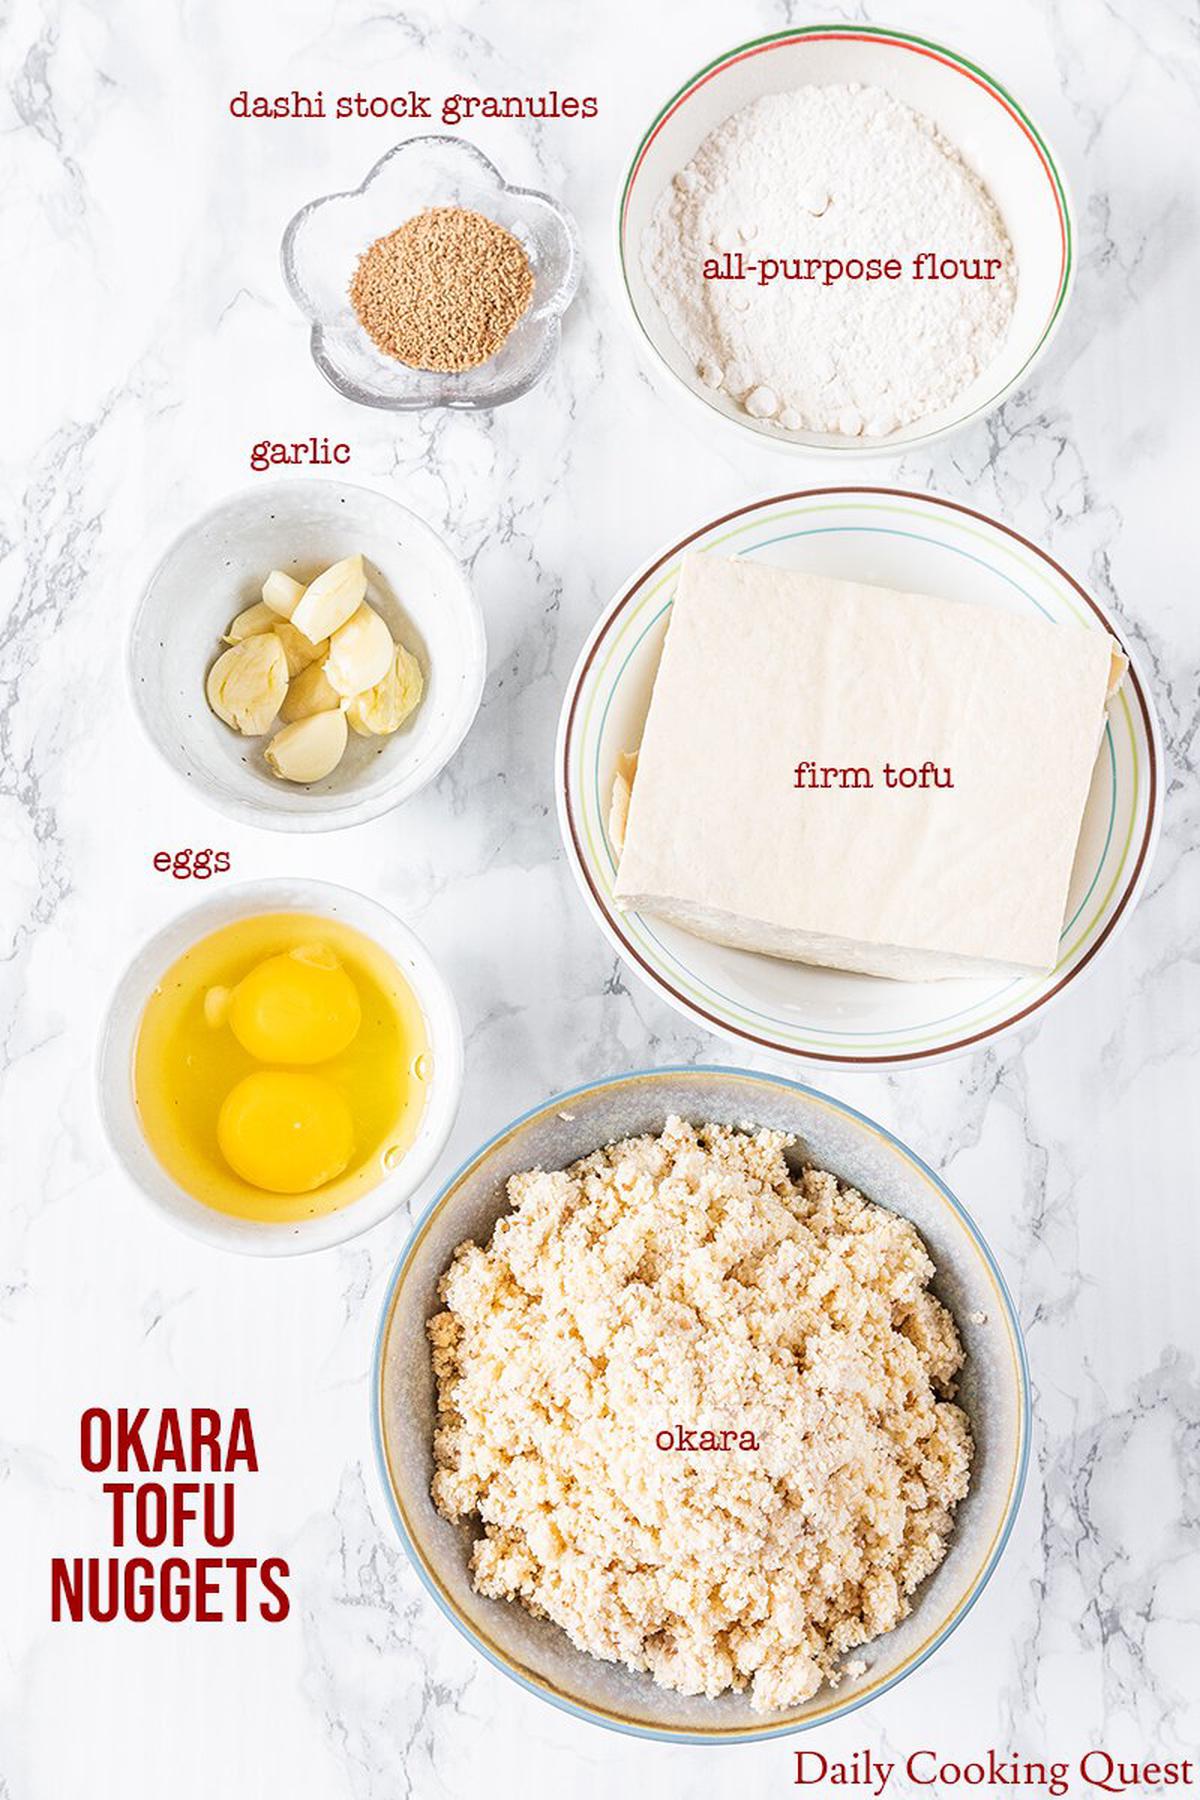 Ingredients for okara tofu nuggets: okara (soybean pulp from making soy milk), tofu, eggs, garlic, all-purpose flour, and dashi stock granules.